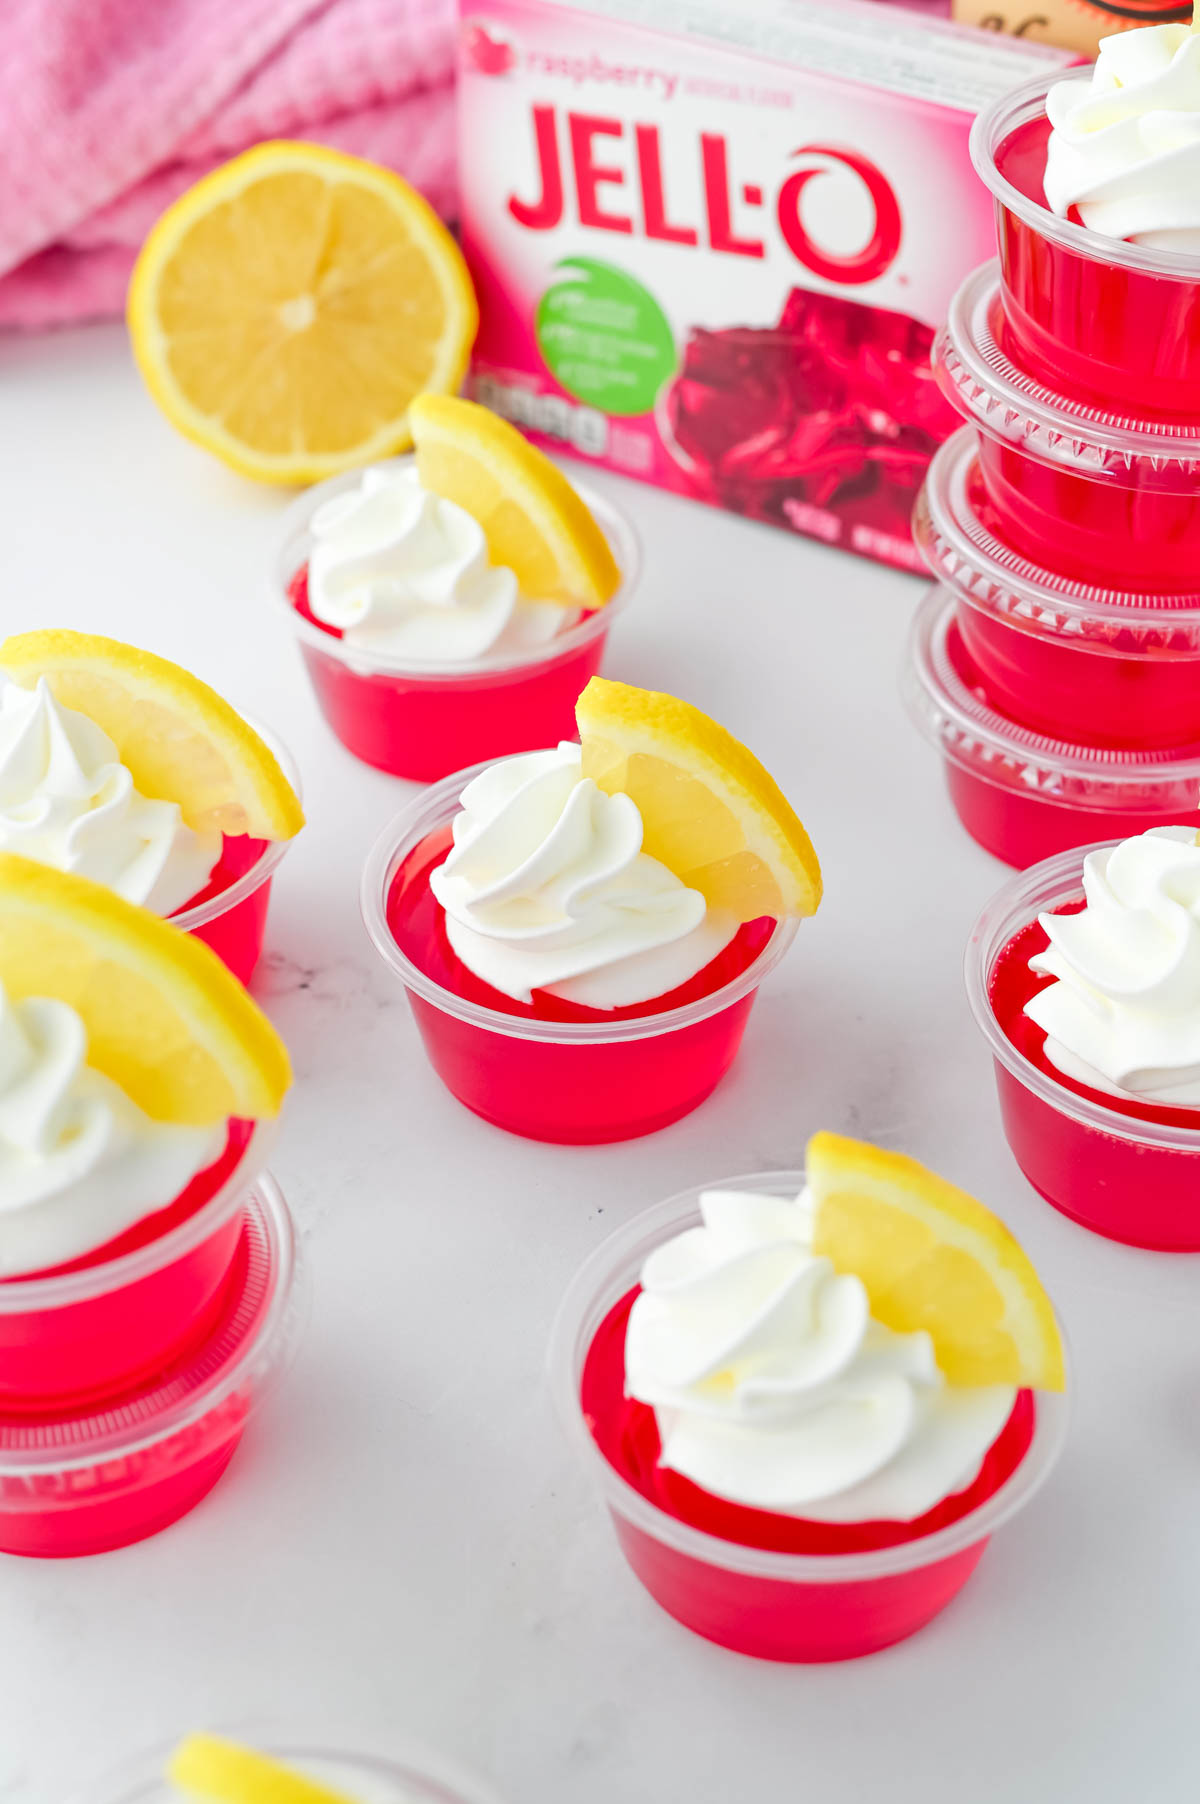 Raspberry Lemon jello shots with whipped cream and lemon slices.